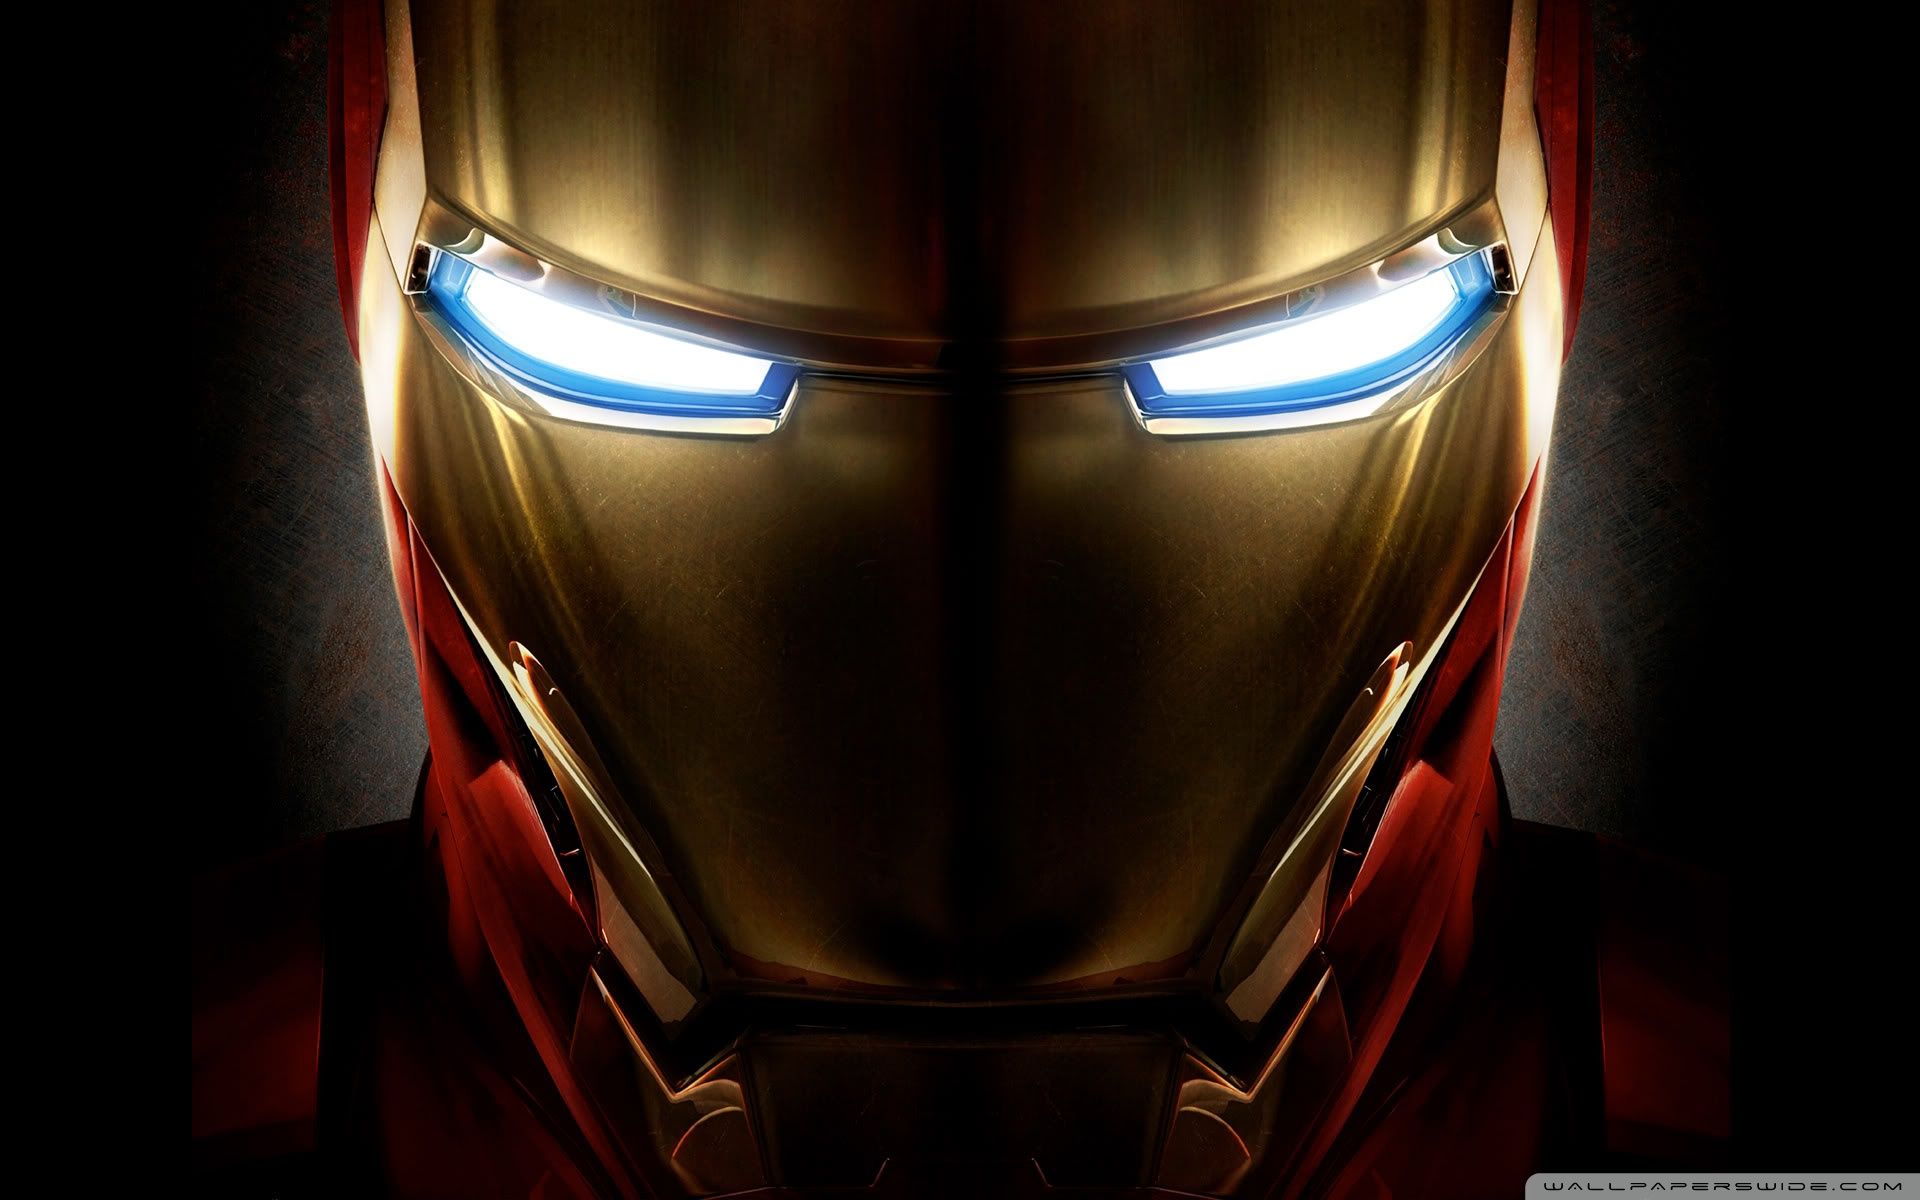 Iron Man image.jpg